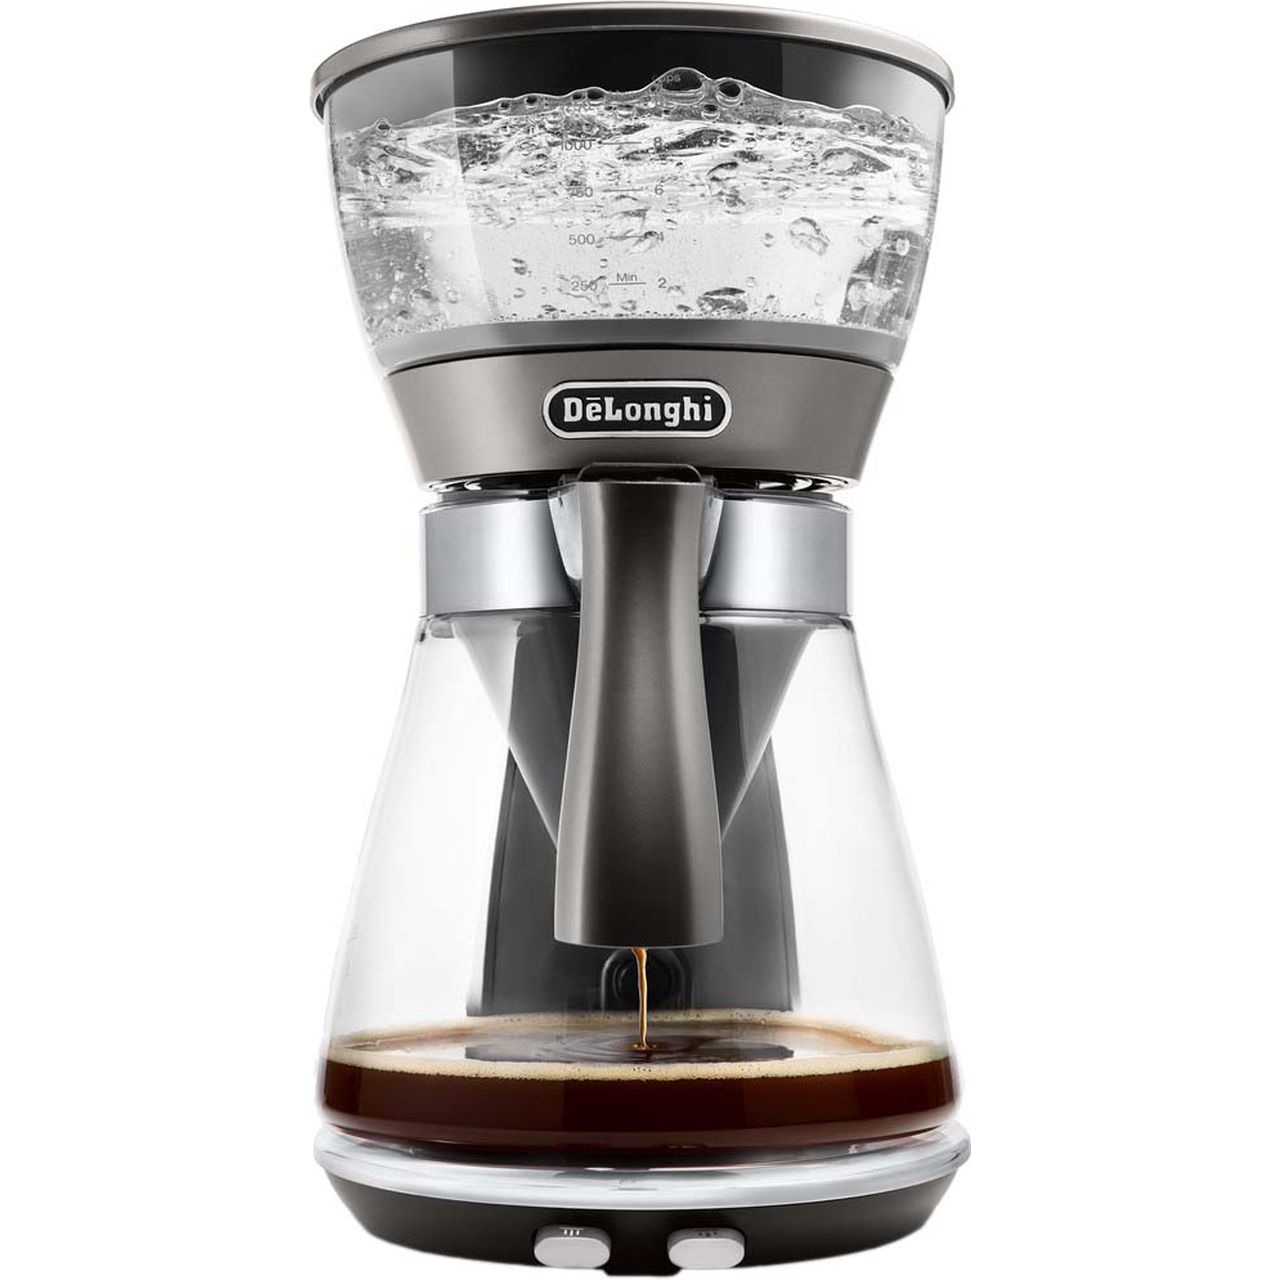 De'Longhi Clessidra ICM17210 Filter Coffee Machine Review